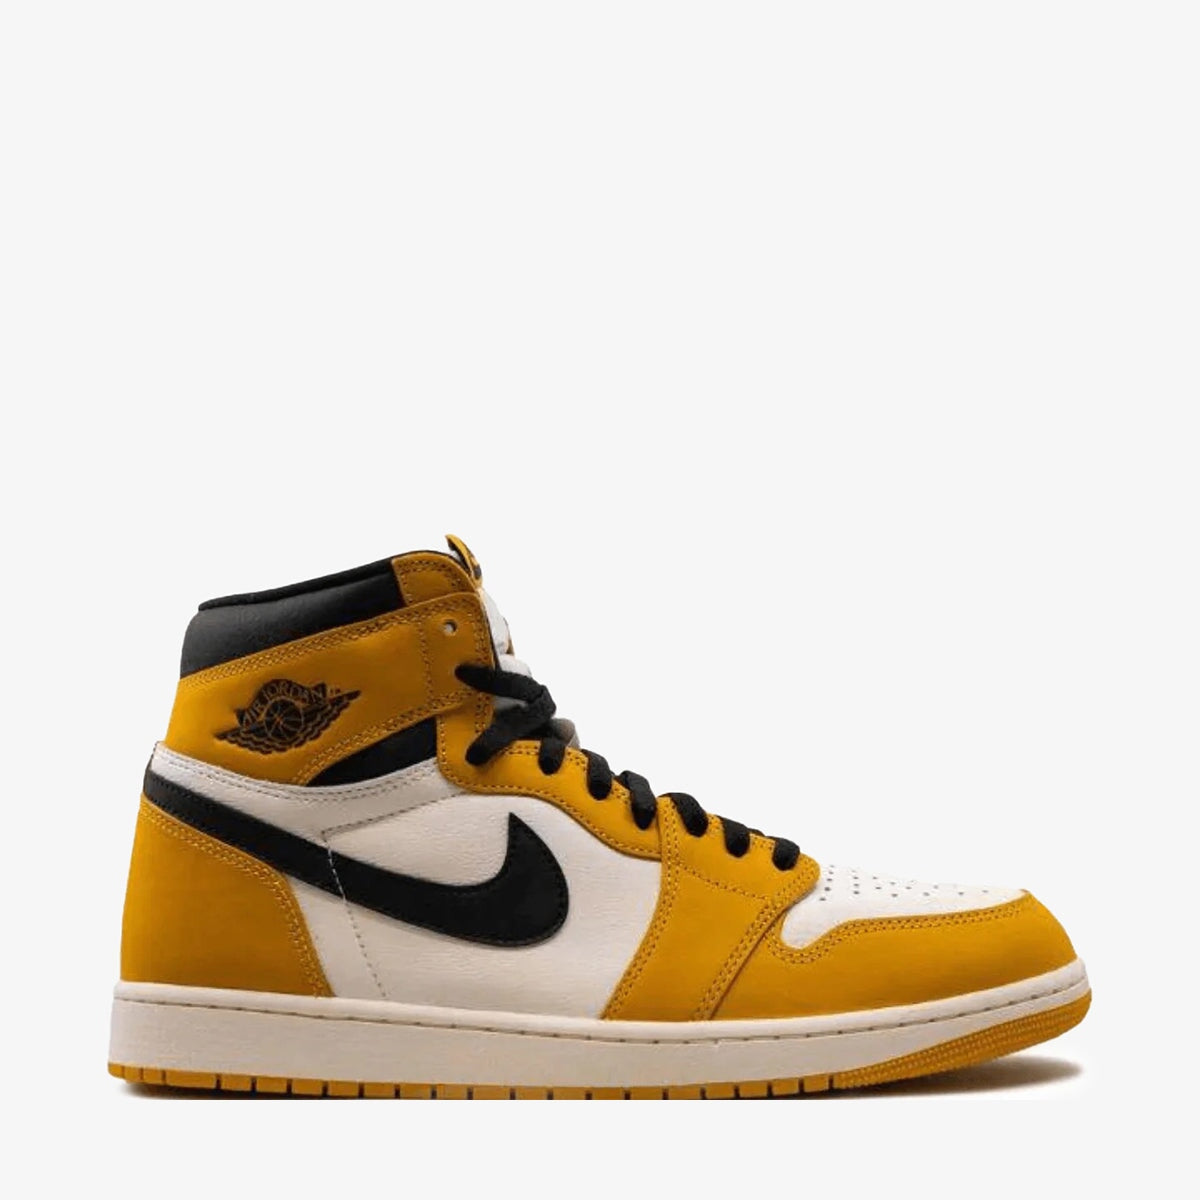 Air Jordan 1 High OG “Yellow Ochre” Sneakers Air Jordan